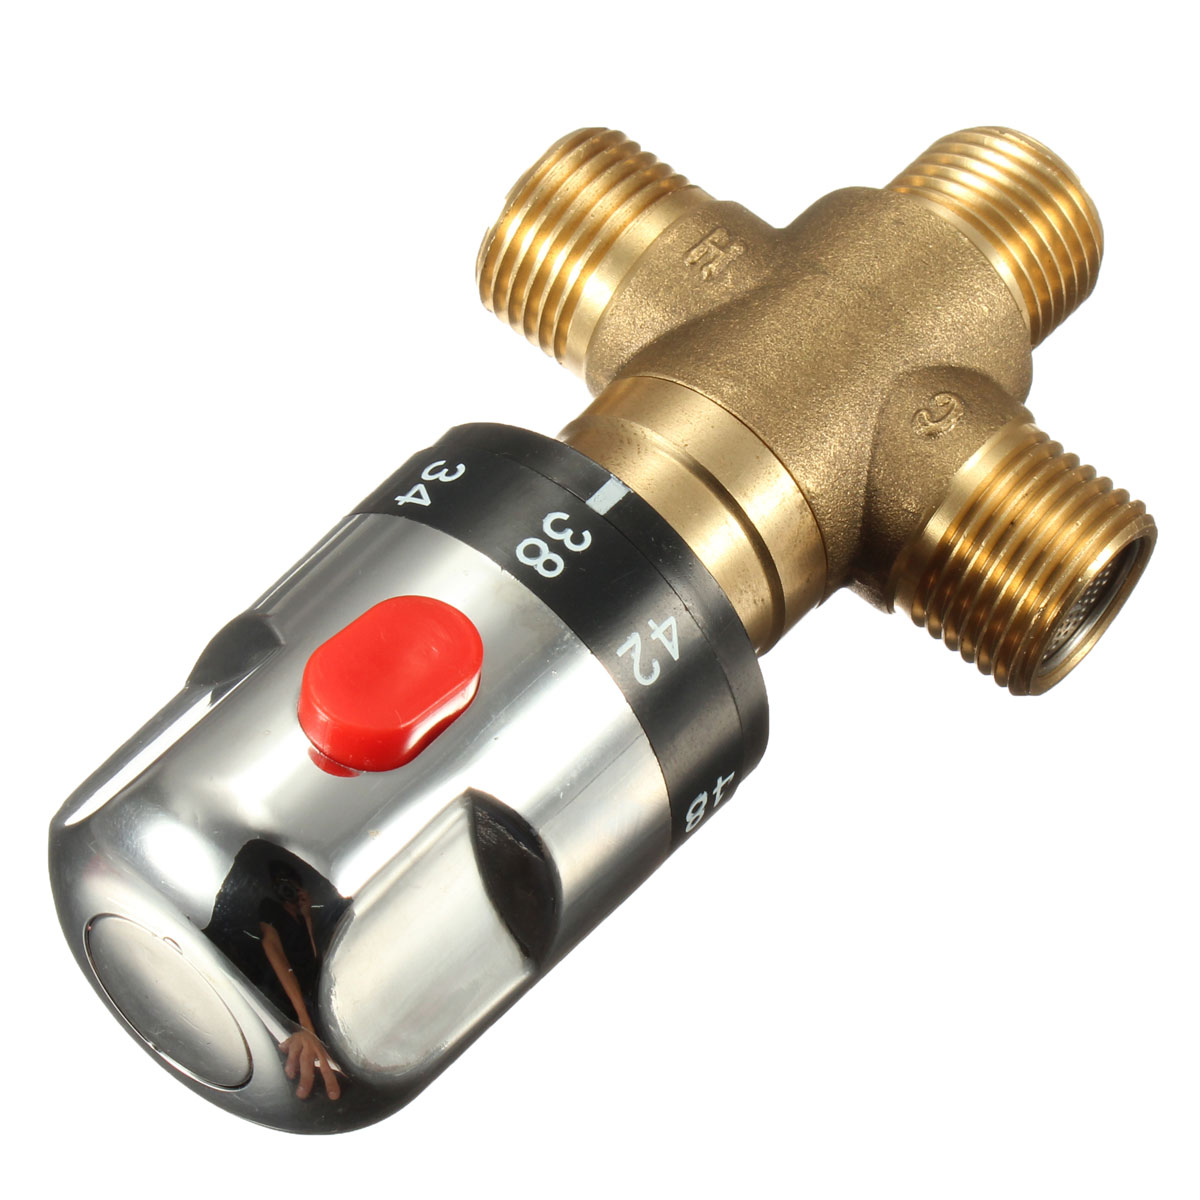 Brass-Thermostatic-Valve-Temperature-Mixing-Valve-For-Wash-Basin-Bidet-Shower-1290505-3